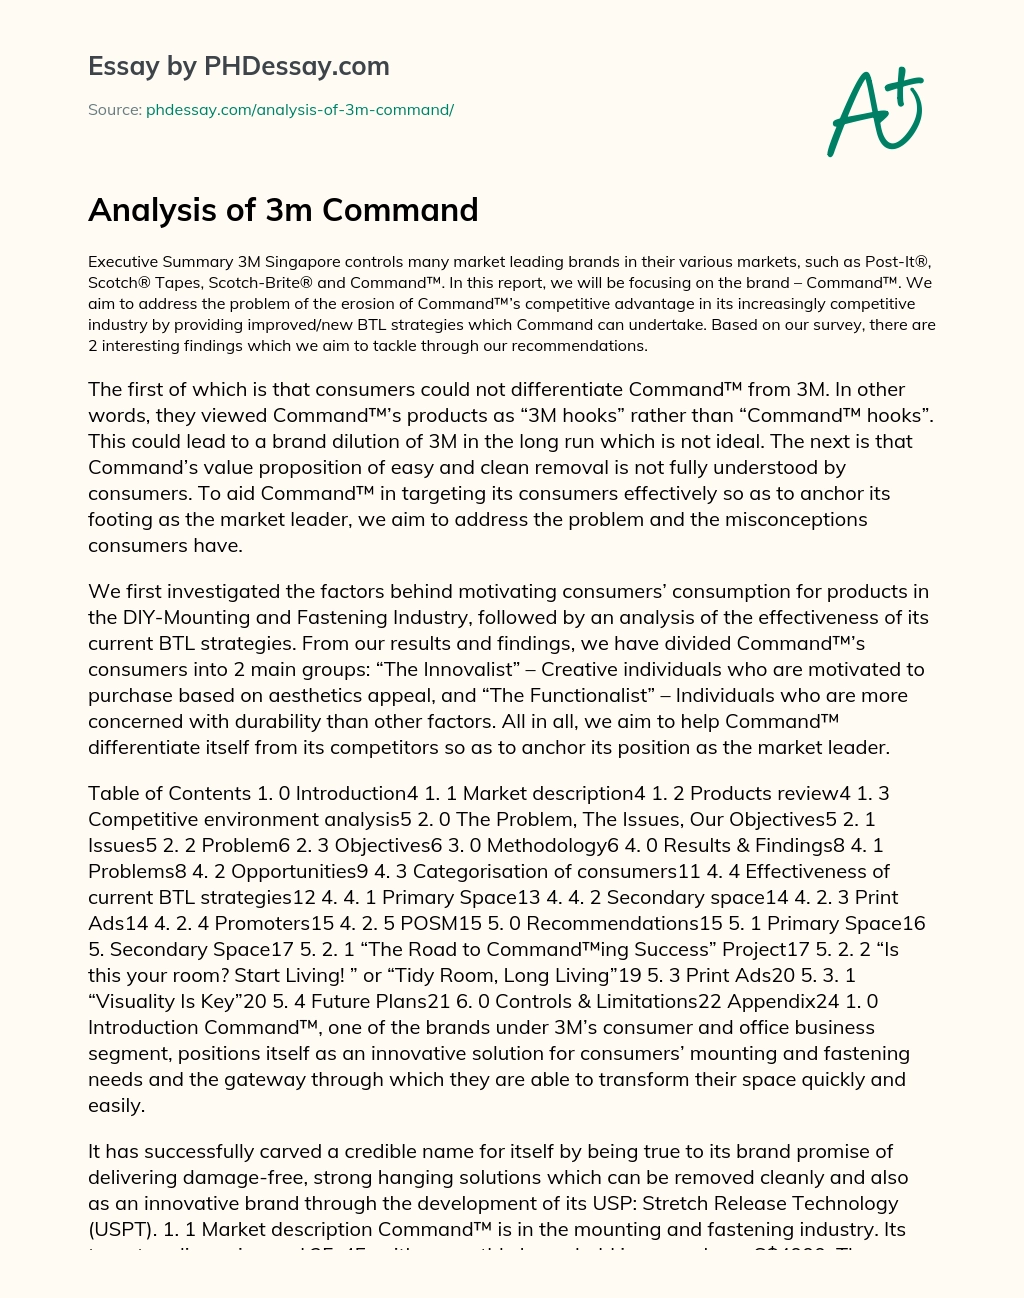 Analysis of 3m Command essay